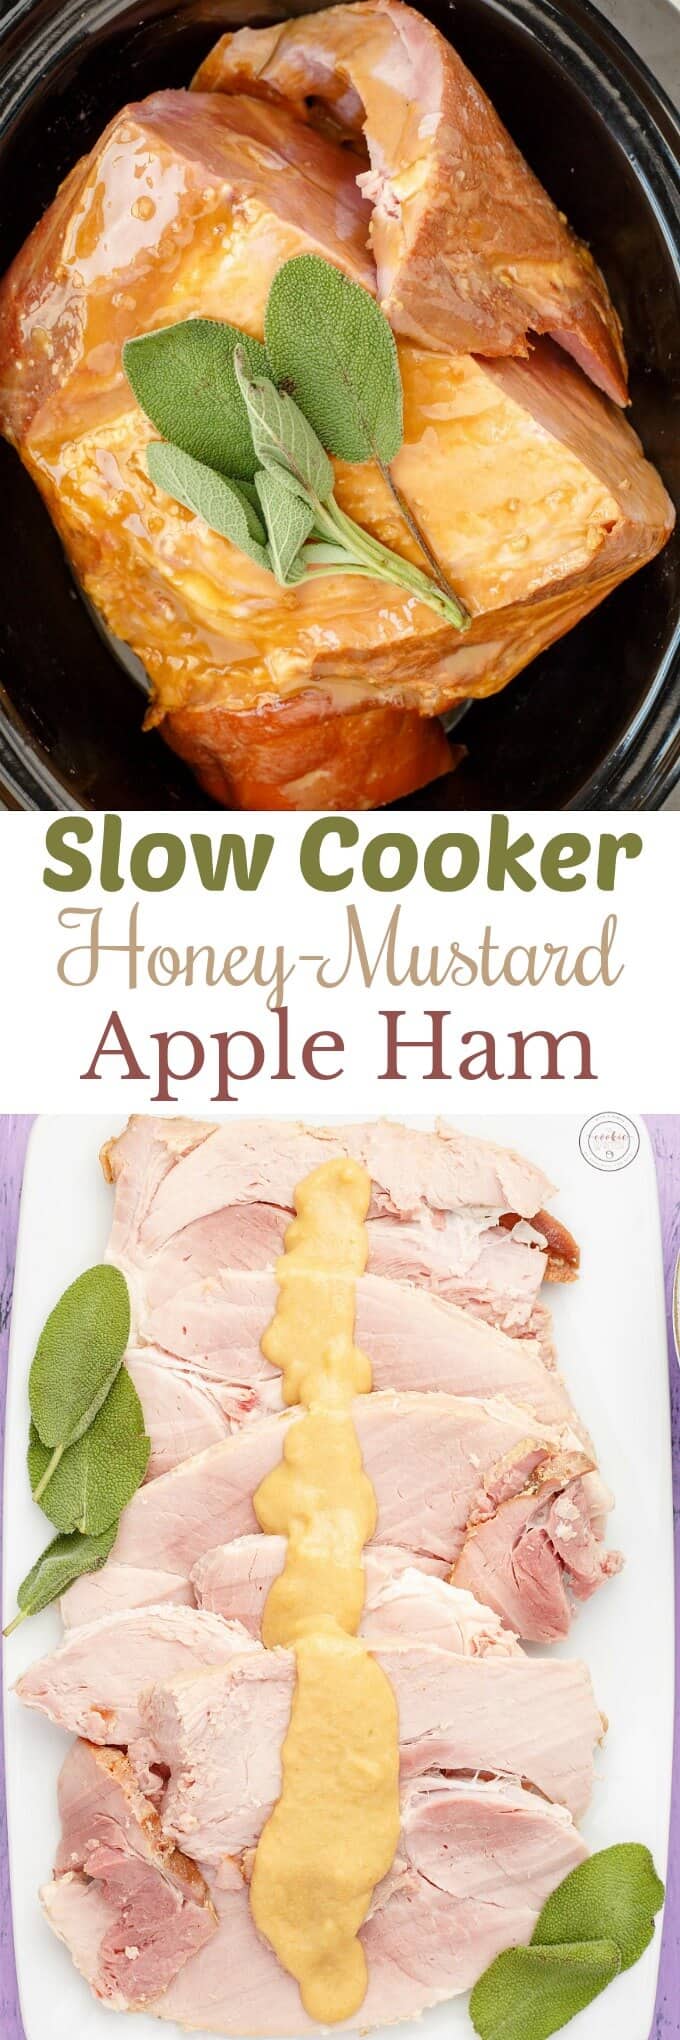 Slow Cooker Honey-Mustard Apple Ham